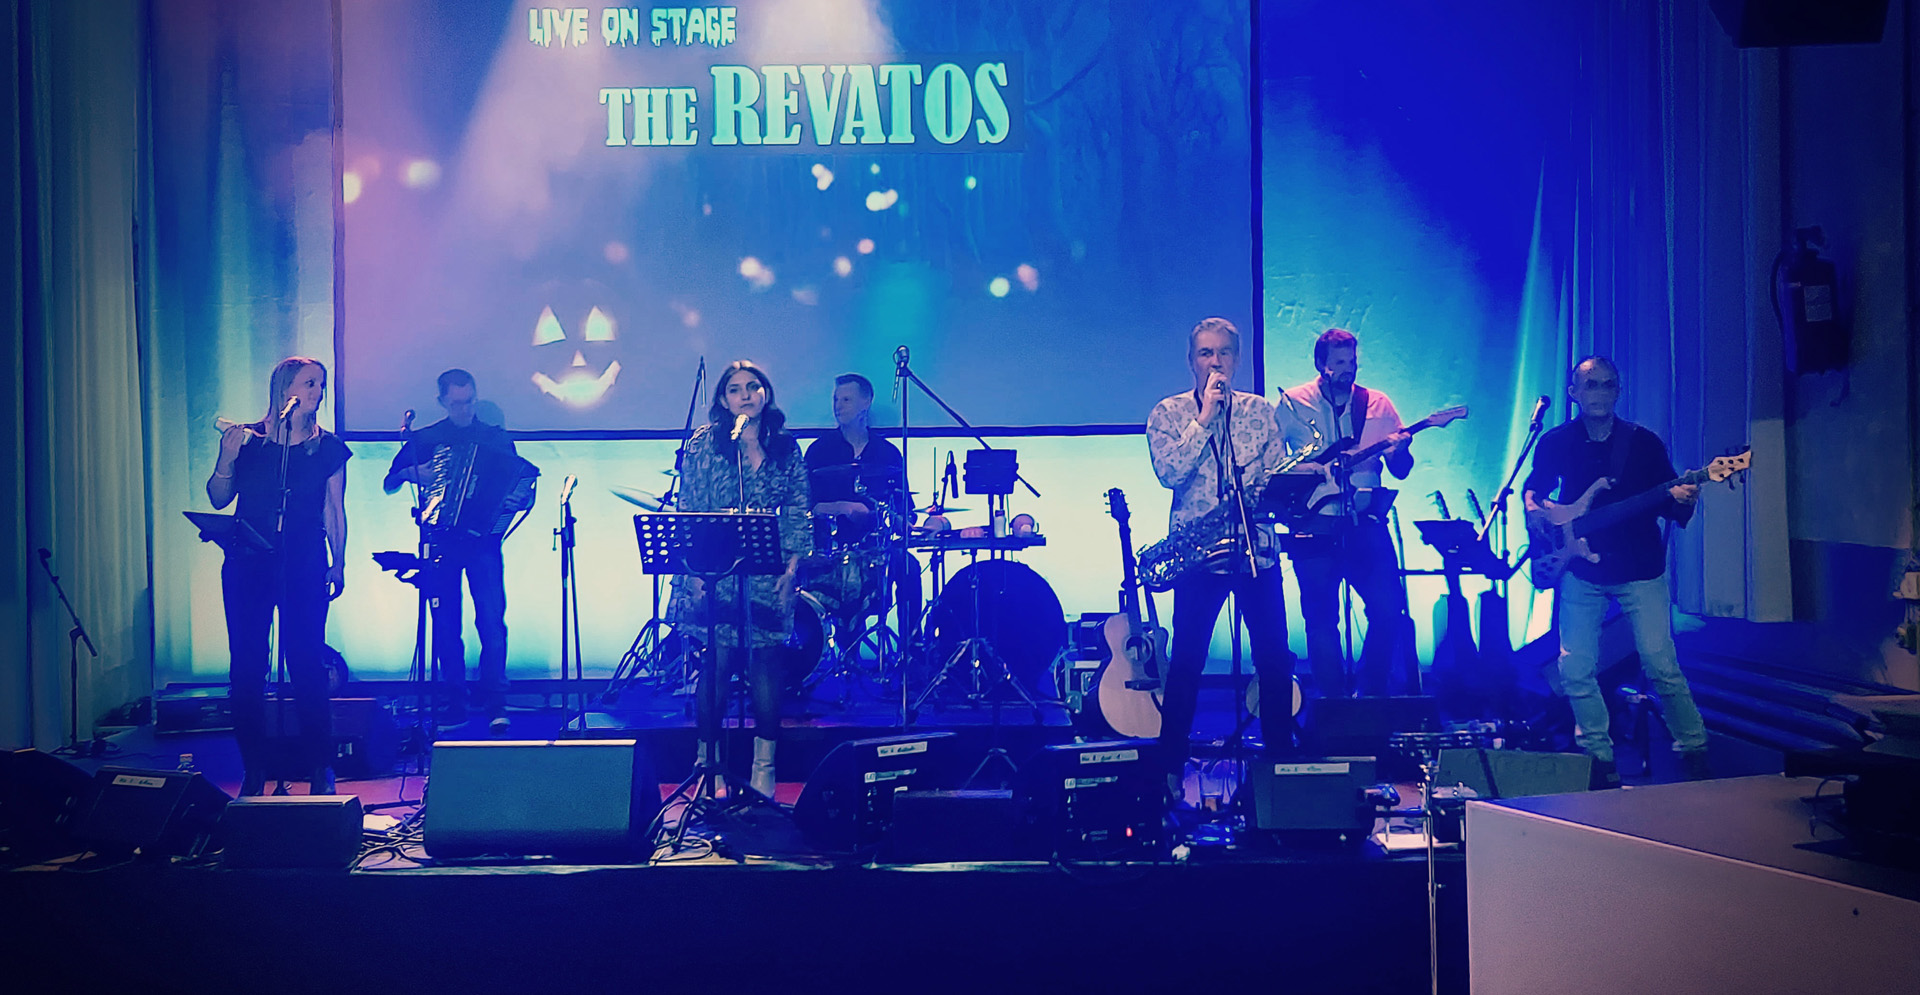 The Revatos